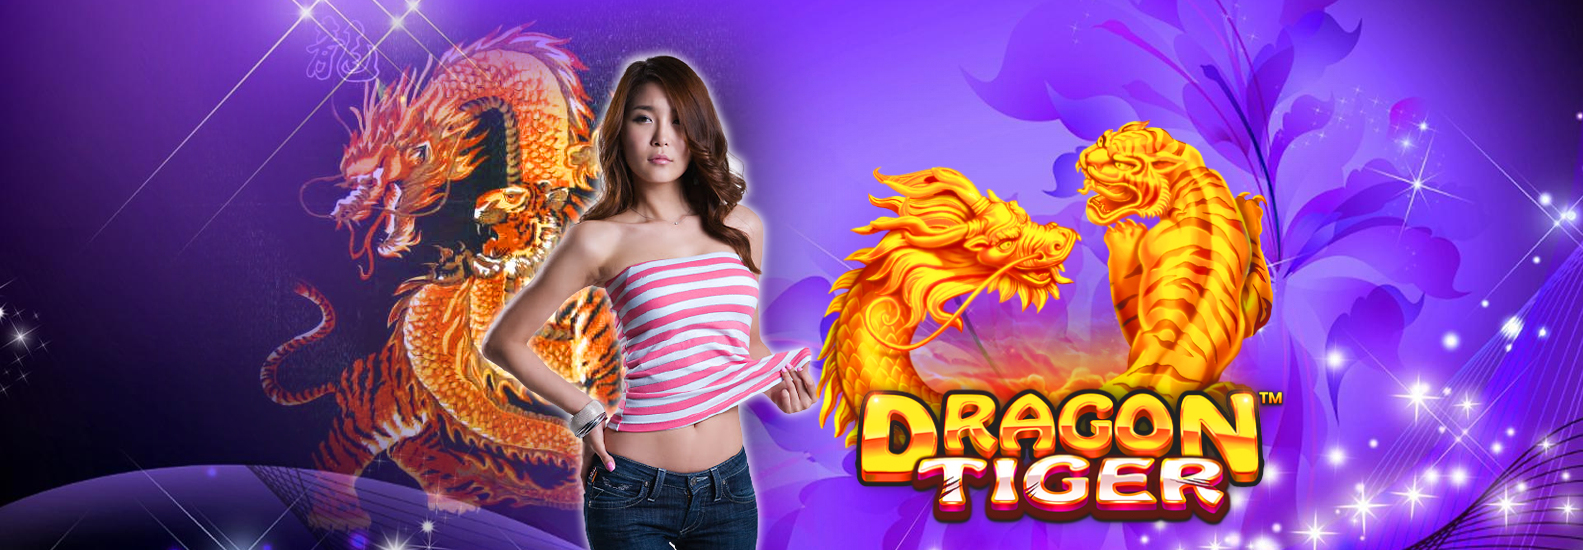 Beberapa Keunggulan Dragon Tiger Dibanding Permainan Casino Lainnya